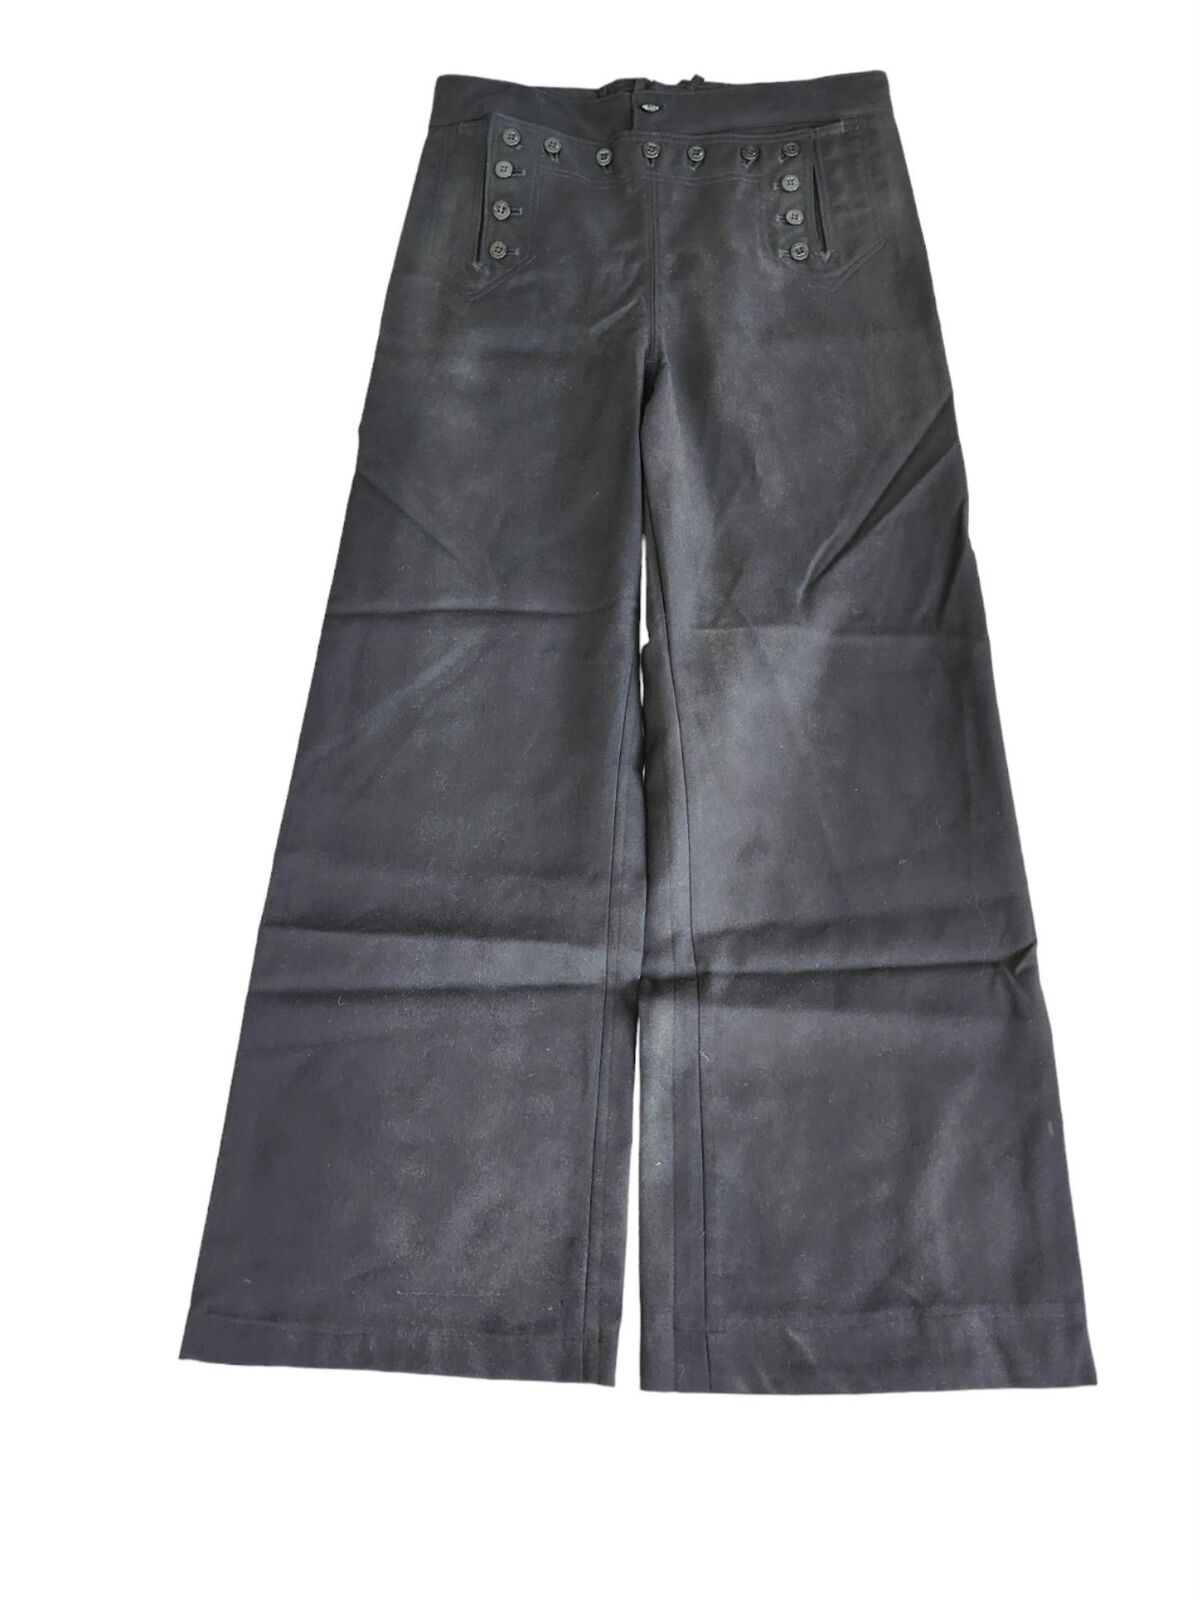 Vintage US Navy Crackerjack Pants 13 Button Wide Leg PANT black Wool 30 x 32